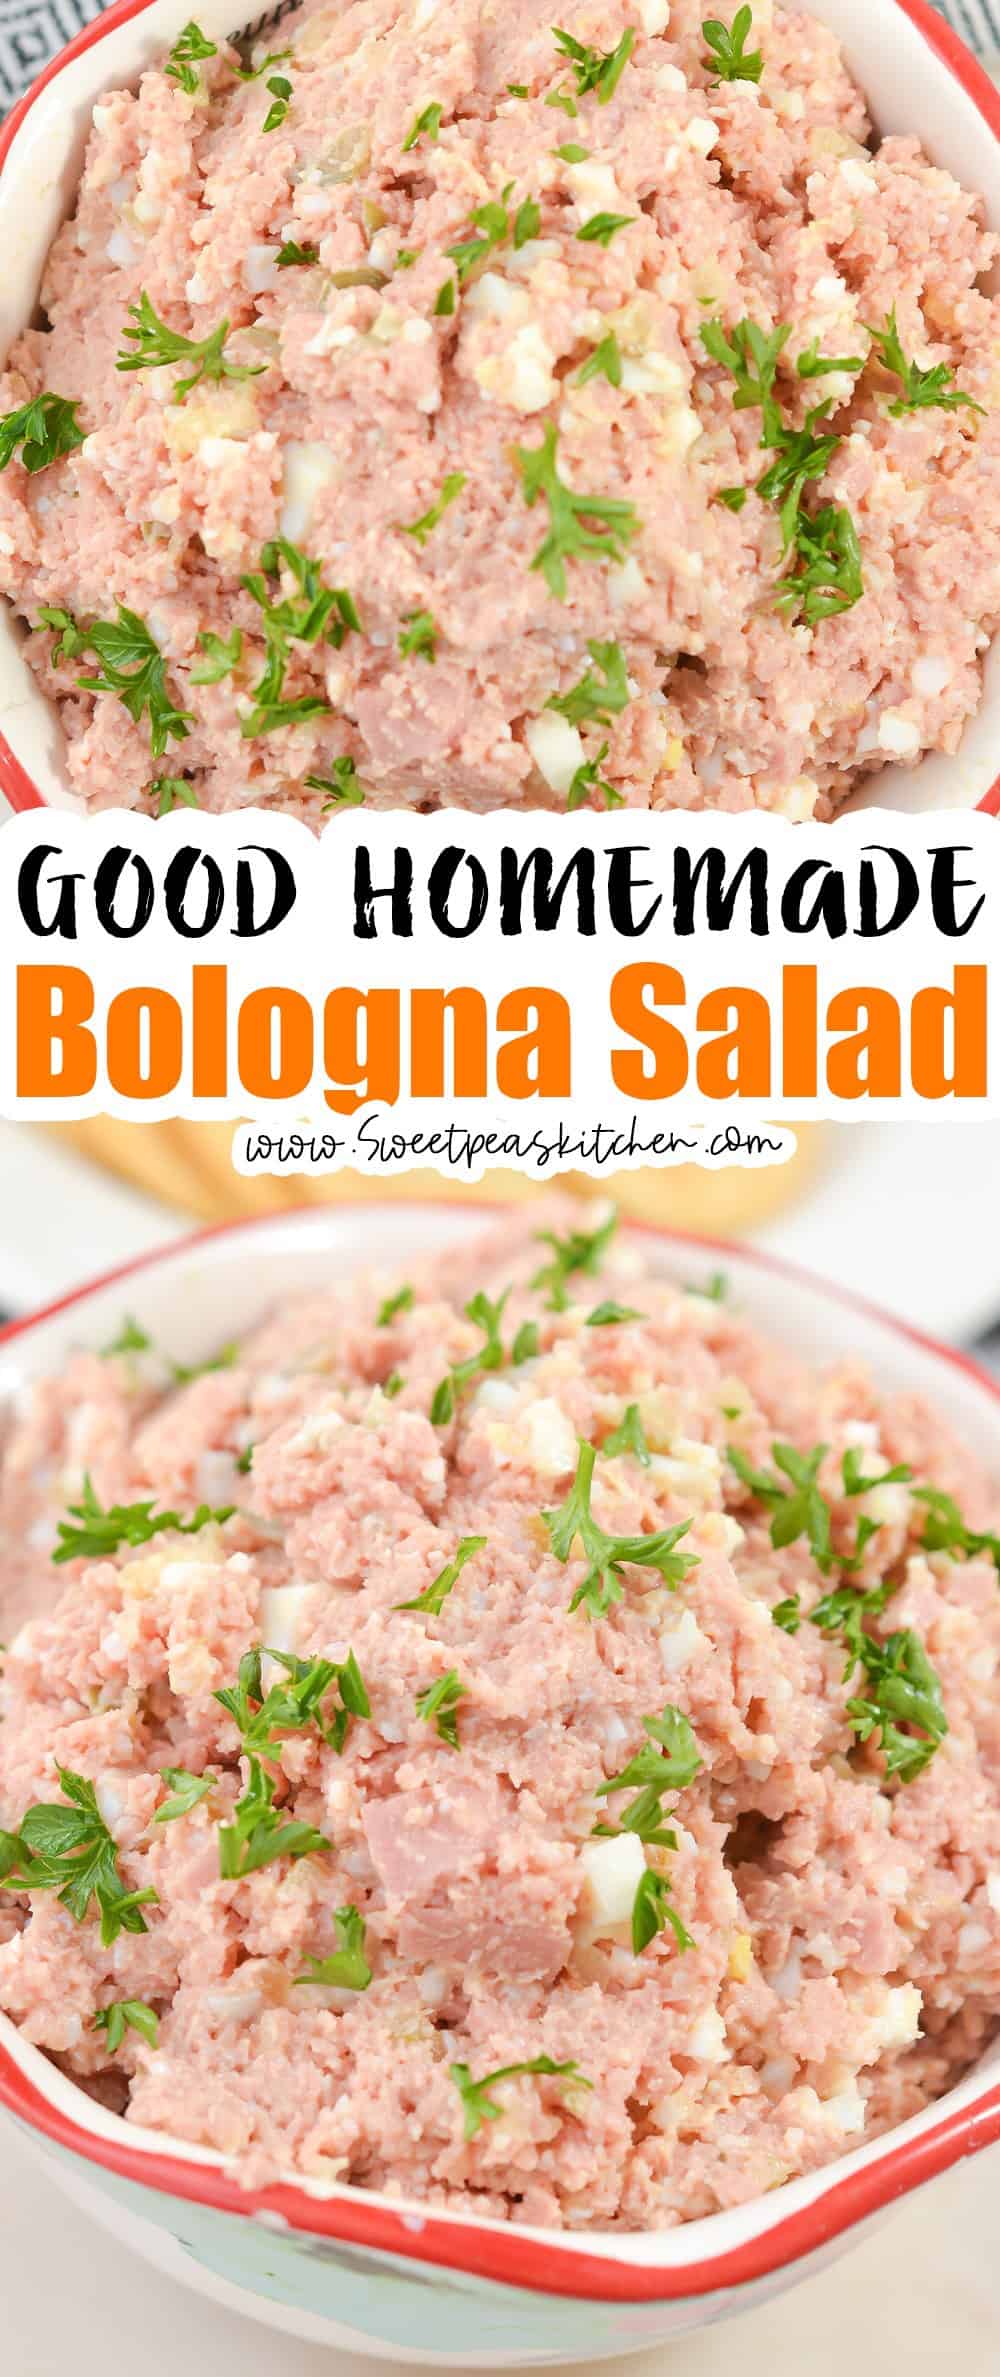 Bologna Salad